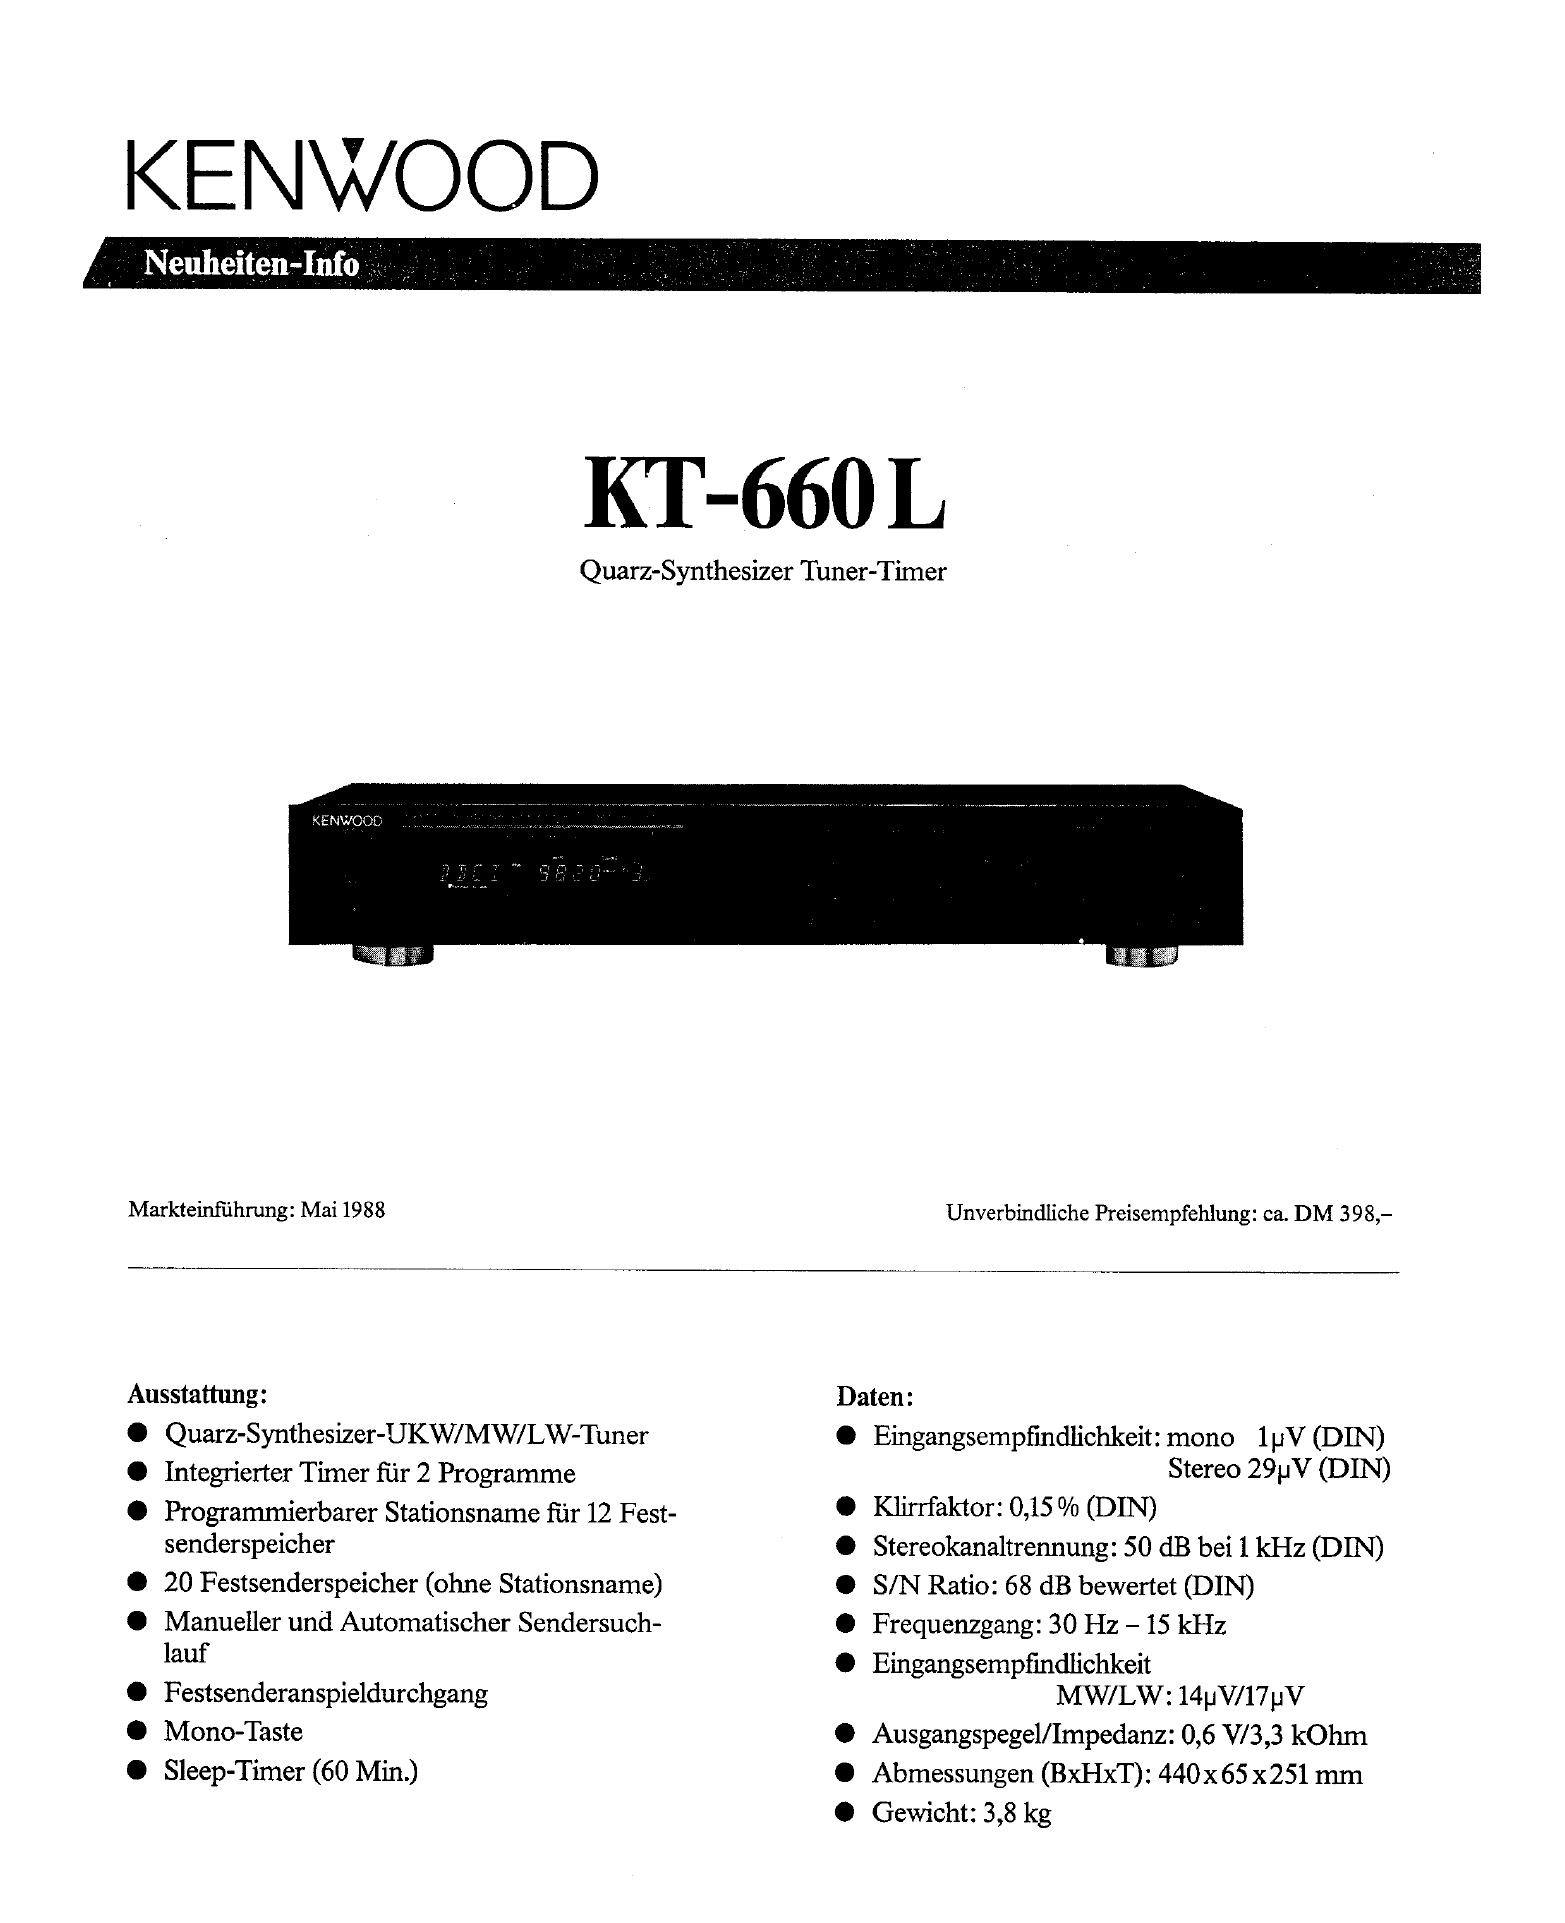 Kenwood KT-660 L-Prospekt-1988.jpg